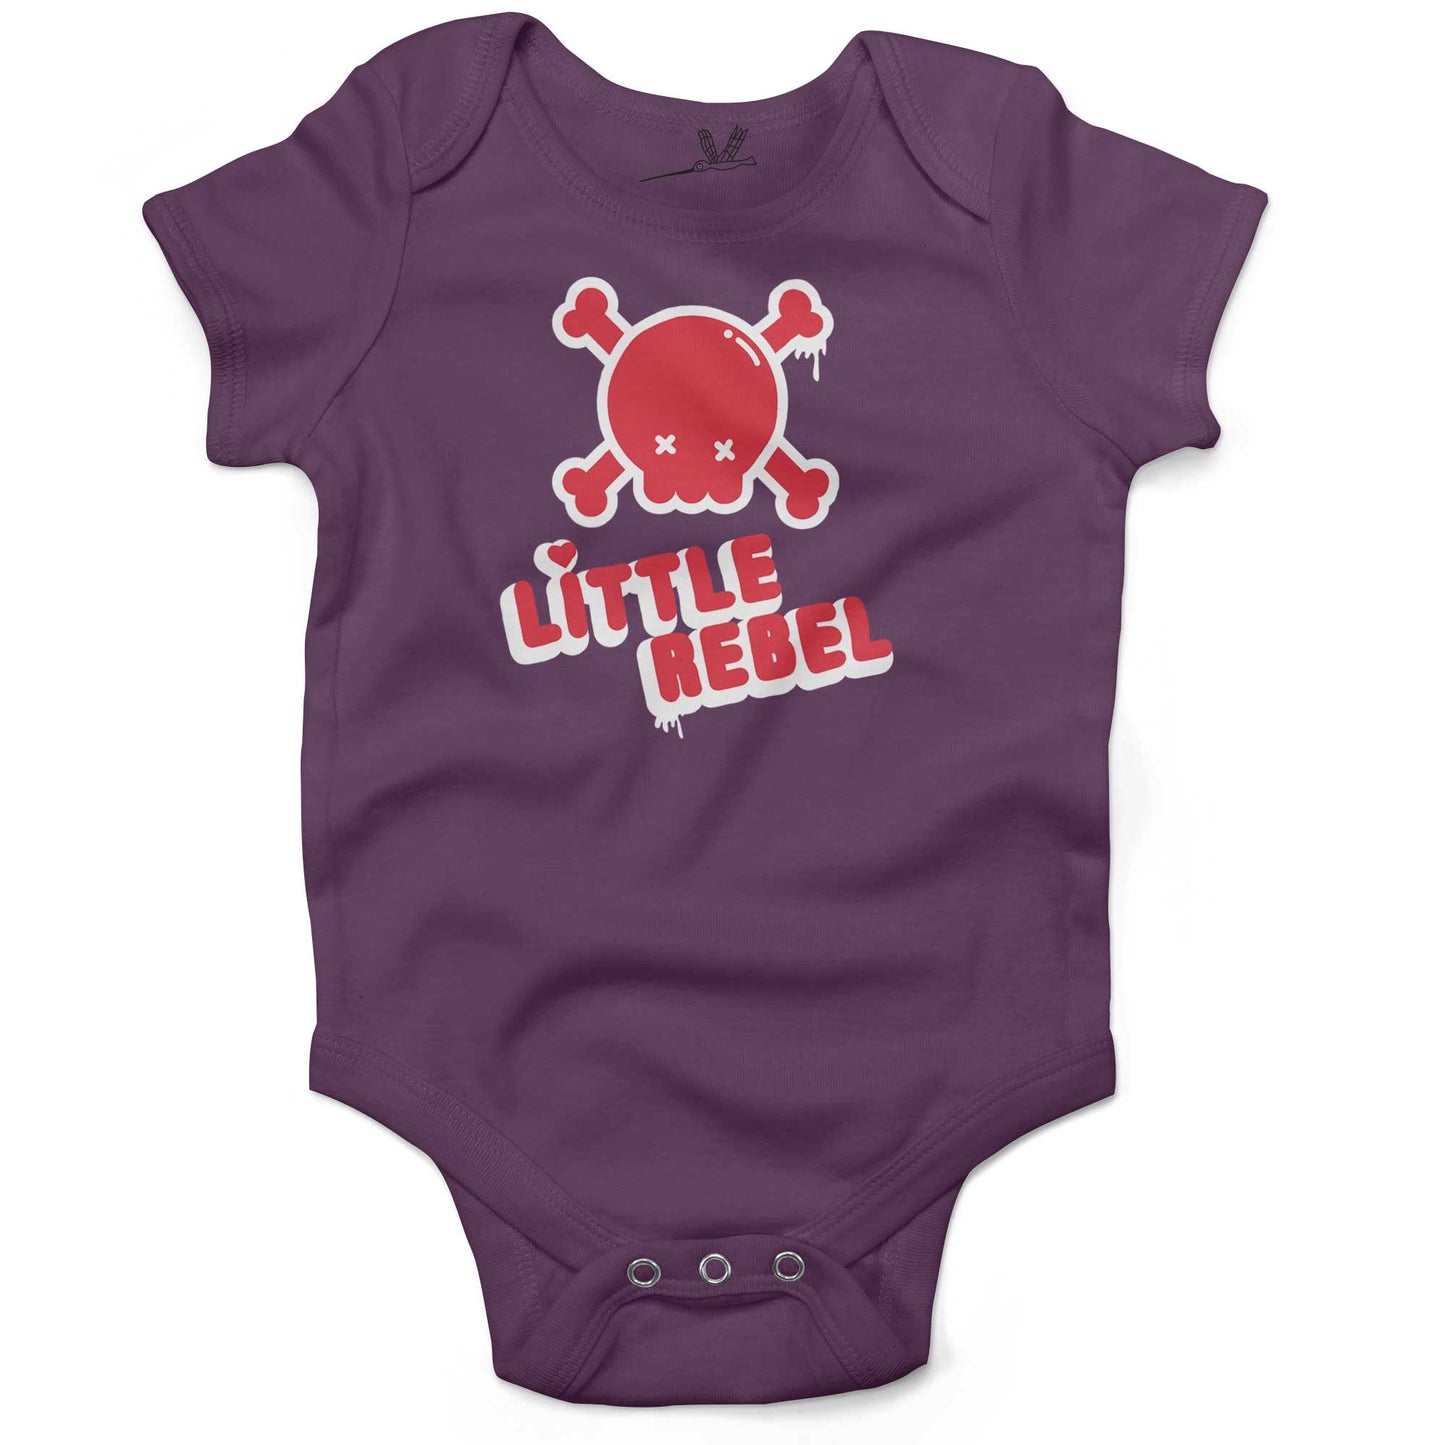 Little Rebel Infant Bodysuit or Raglan Baby Tee-Organic Purple-3-6 months